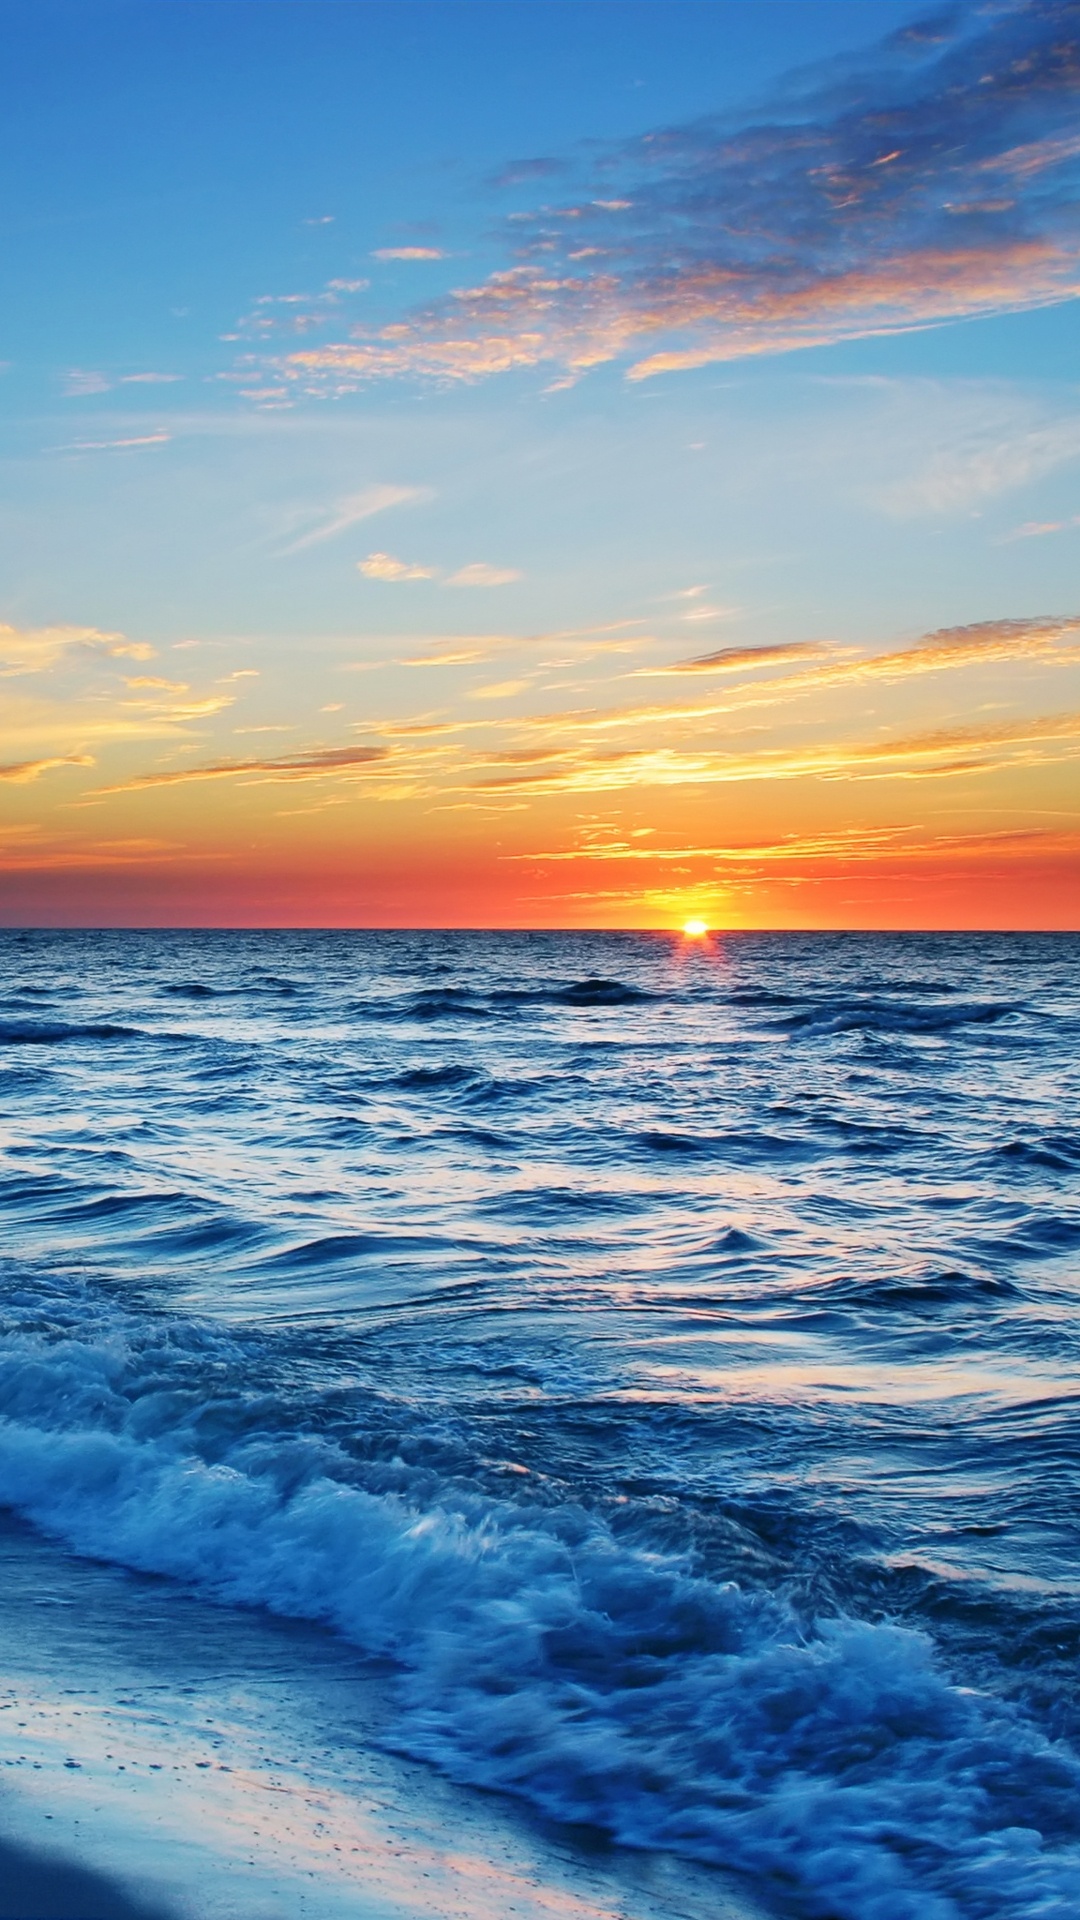 Ocean Waves Crashing on Shore During Sunset. Wallpaper in 1080x1920 Resolution